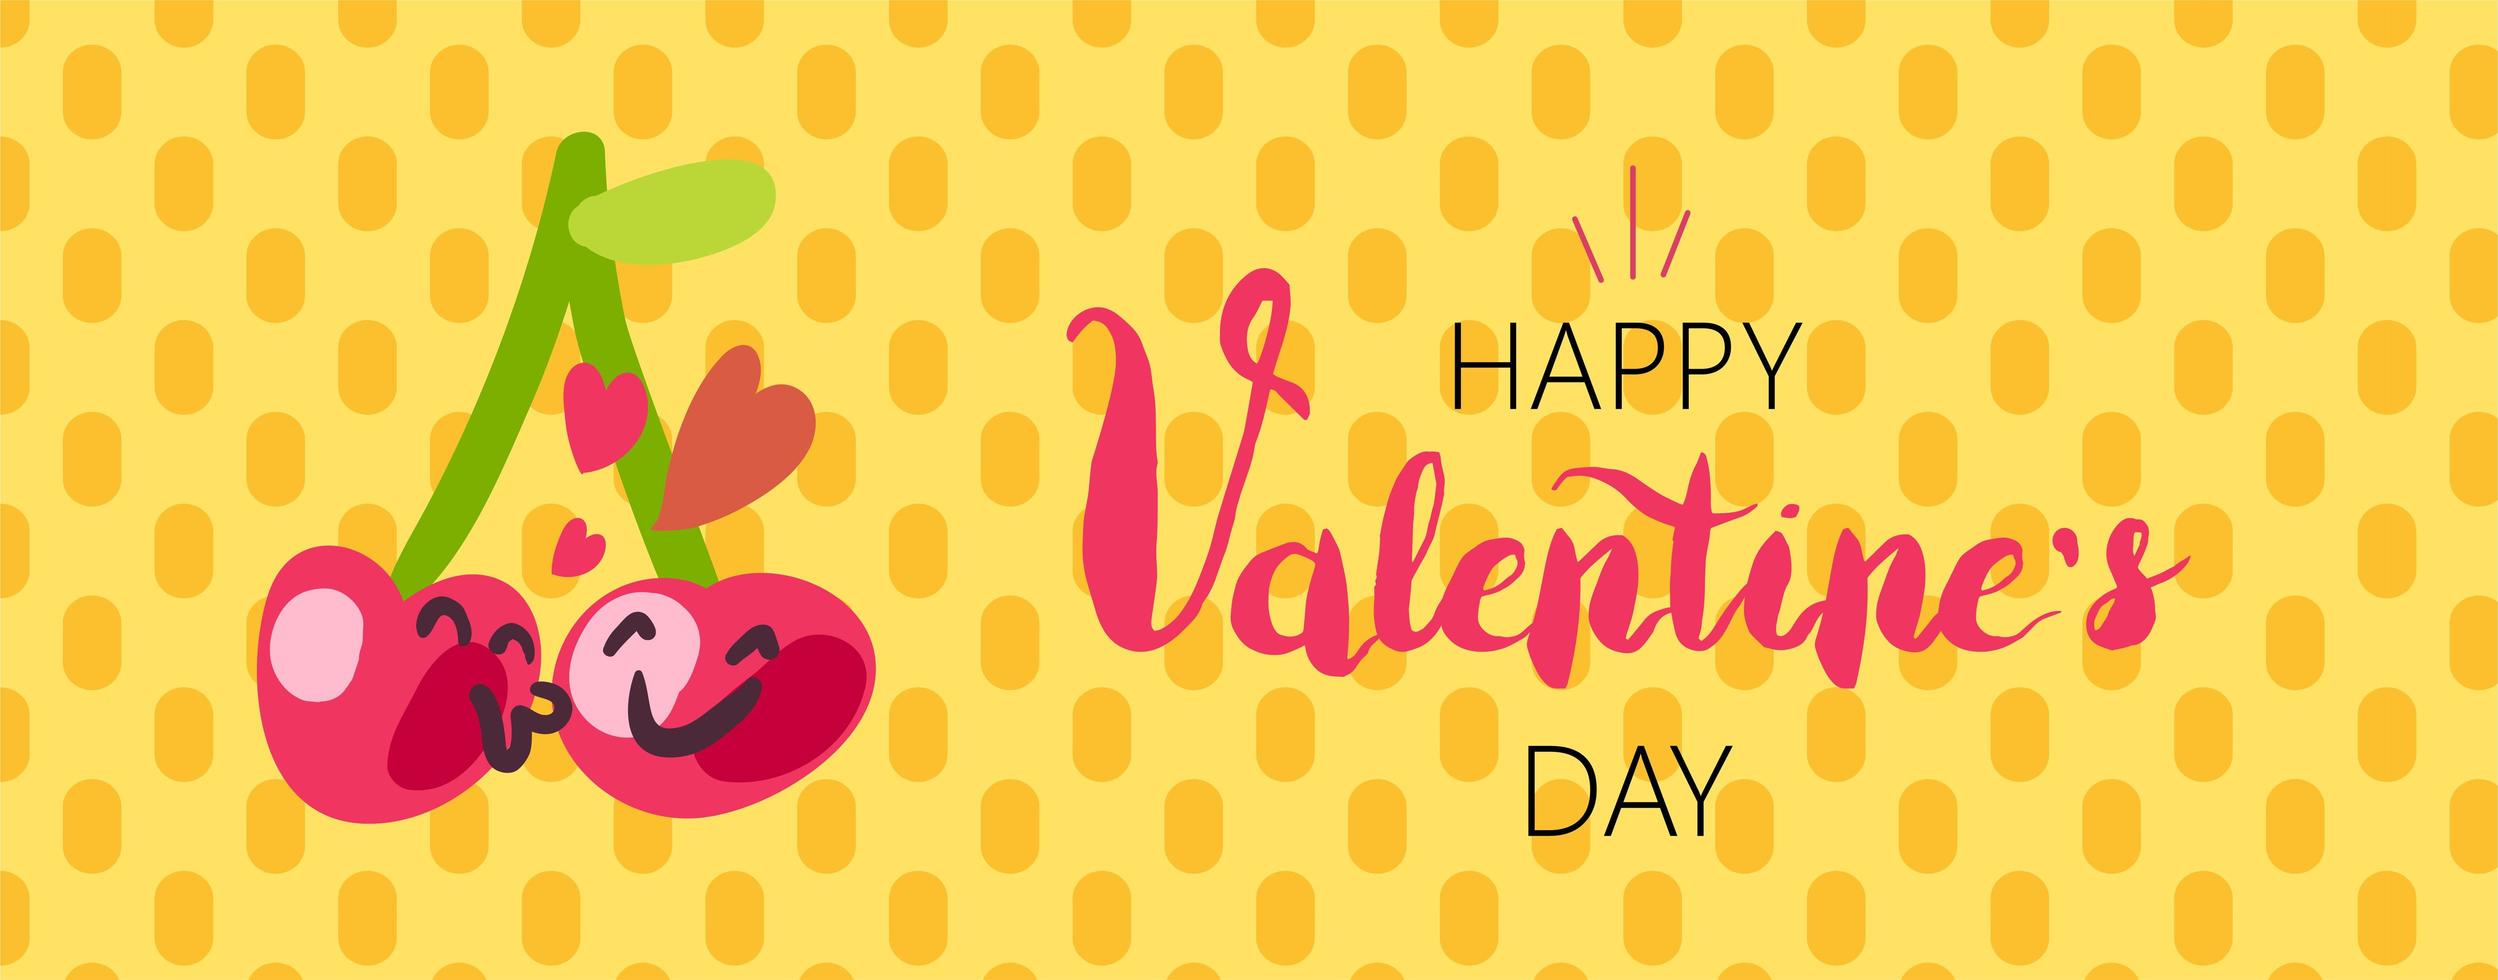 Happy Valentines Day cartoon banner design vector